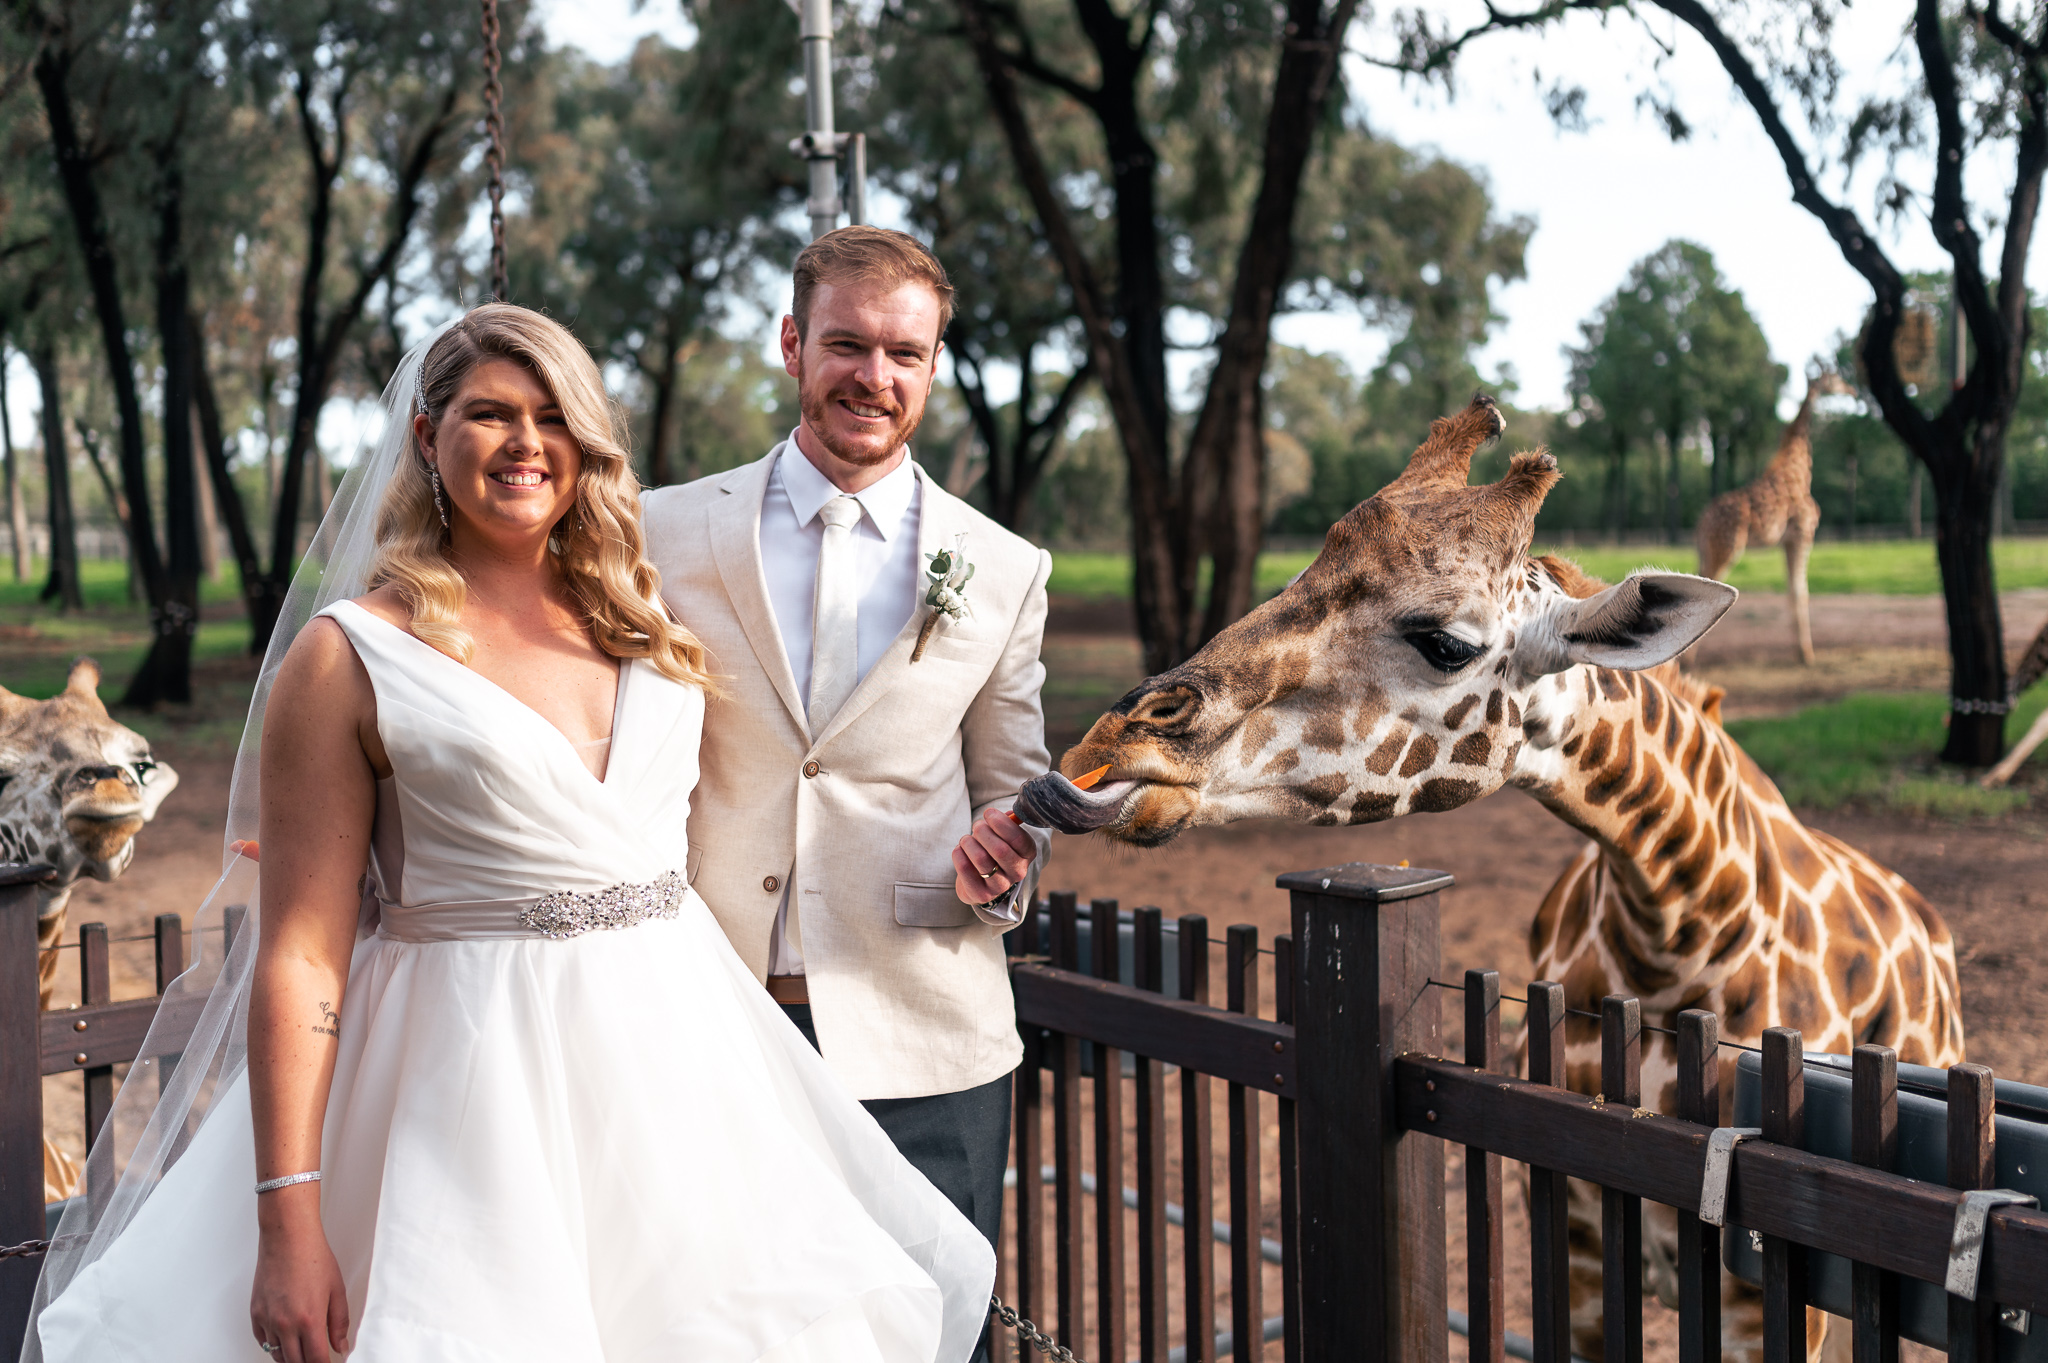 wedding photos with giraffe at dubbo zoo